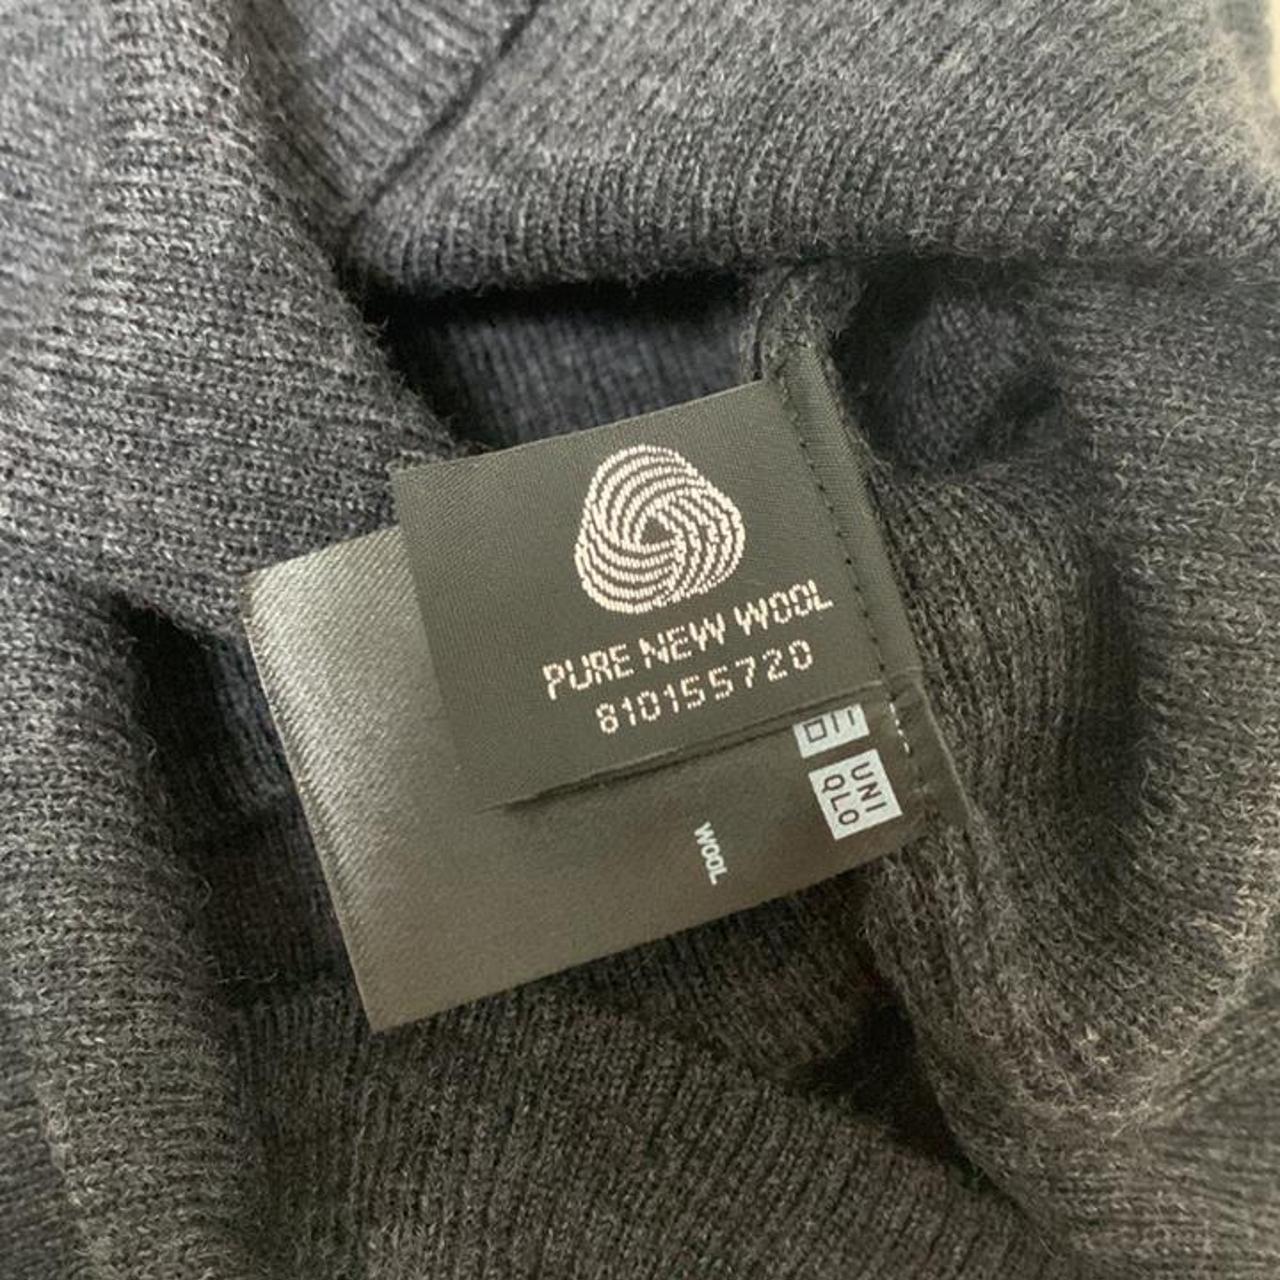 uniqlo 100% wool dark grey turtleneck sweater never... - Depop